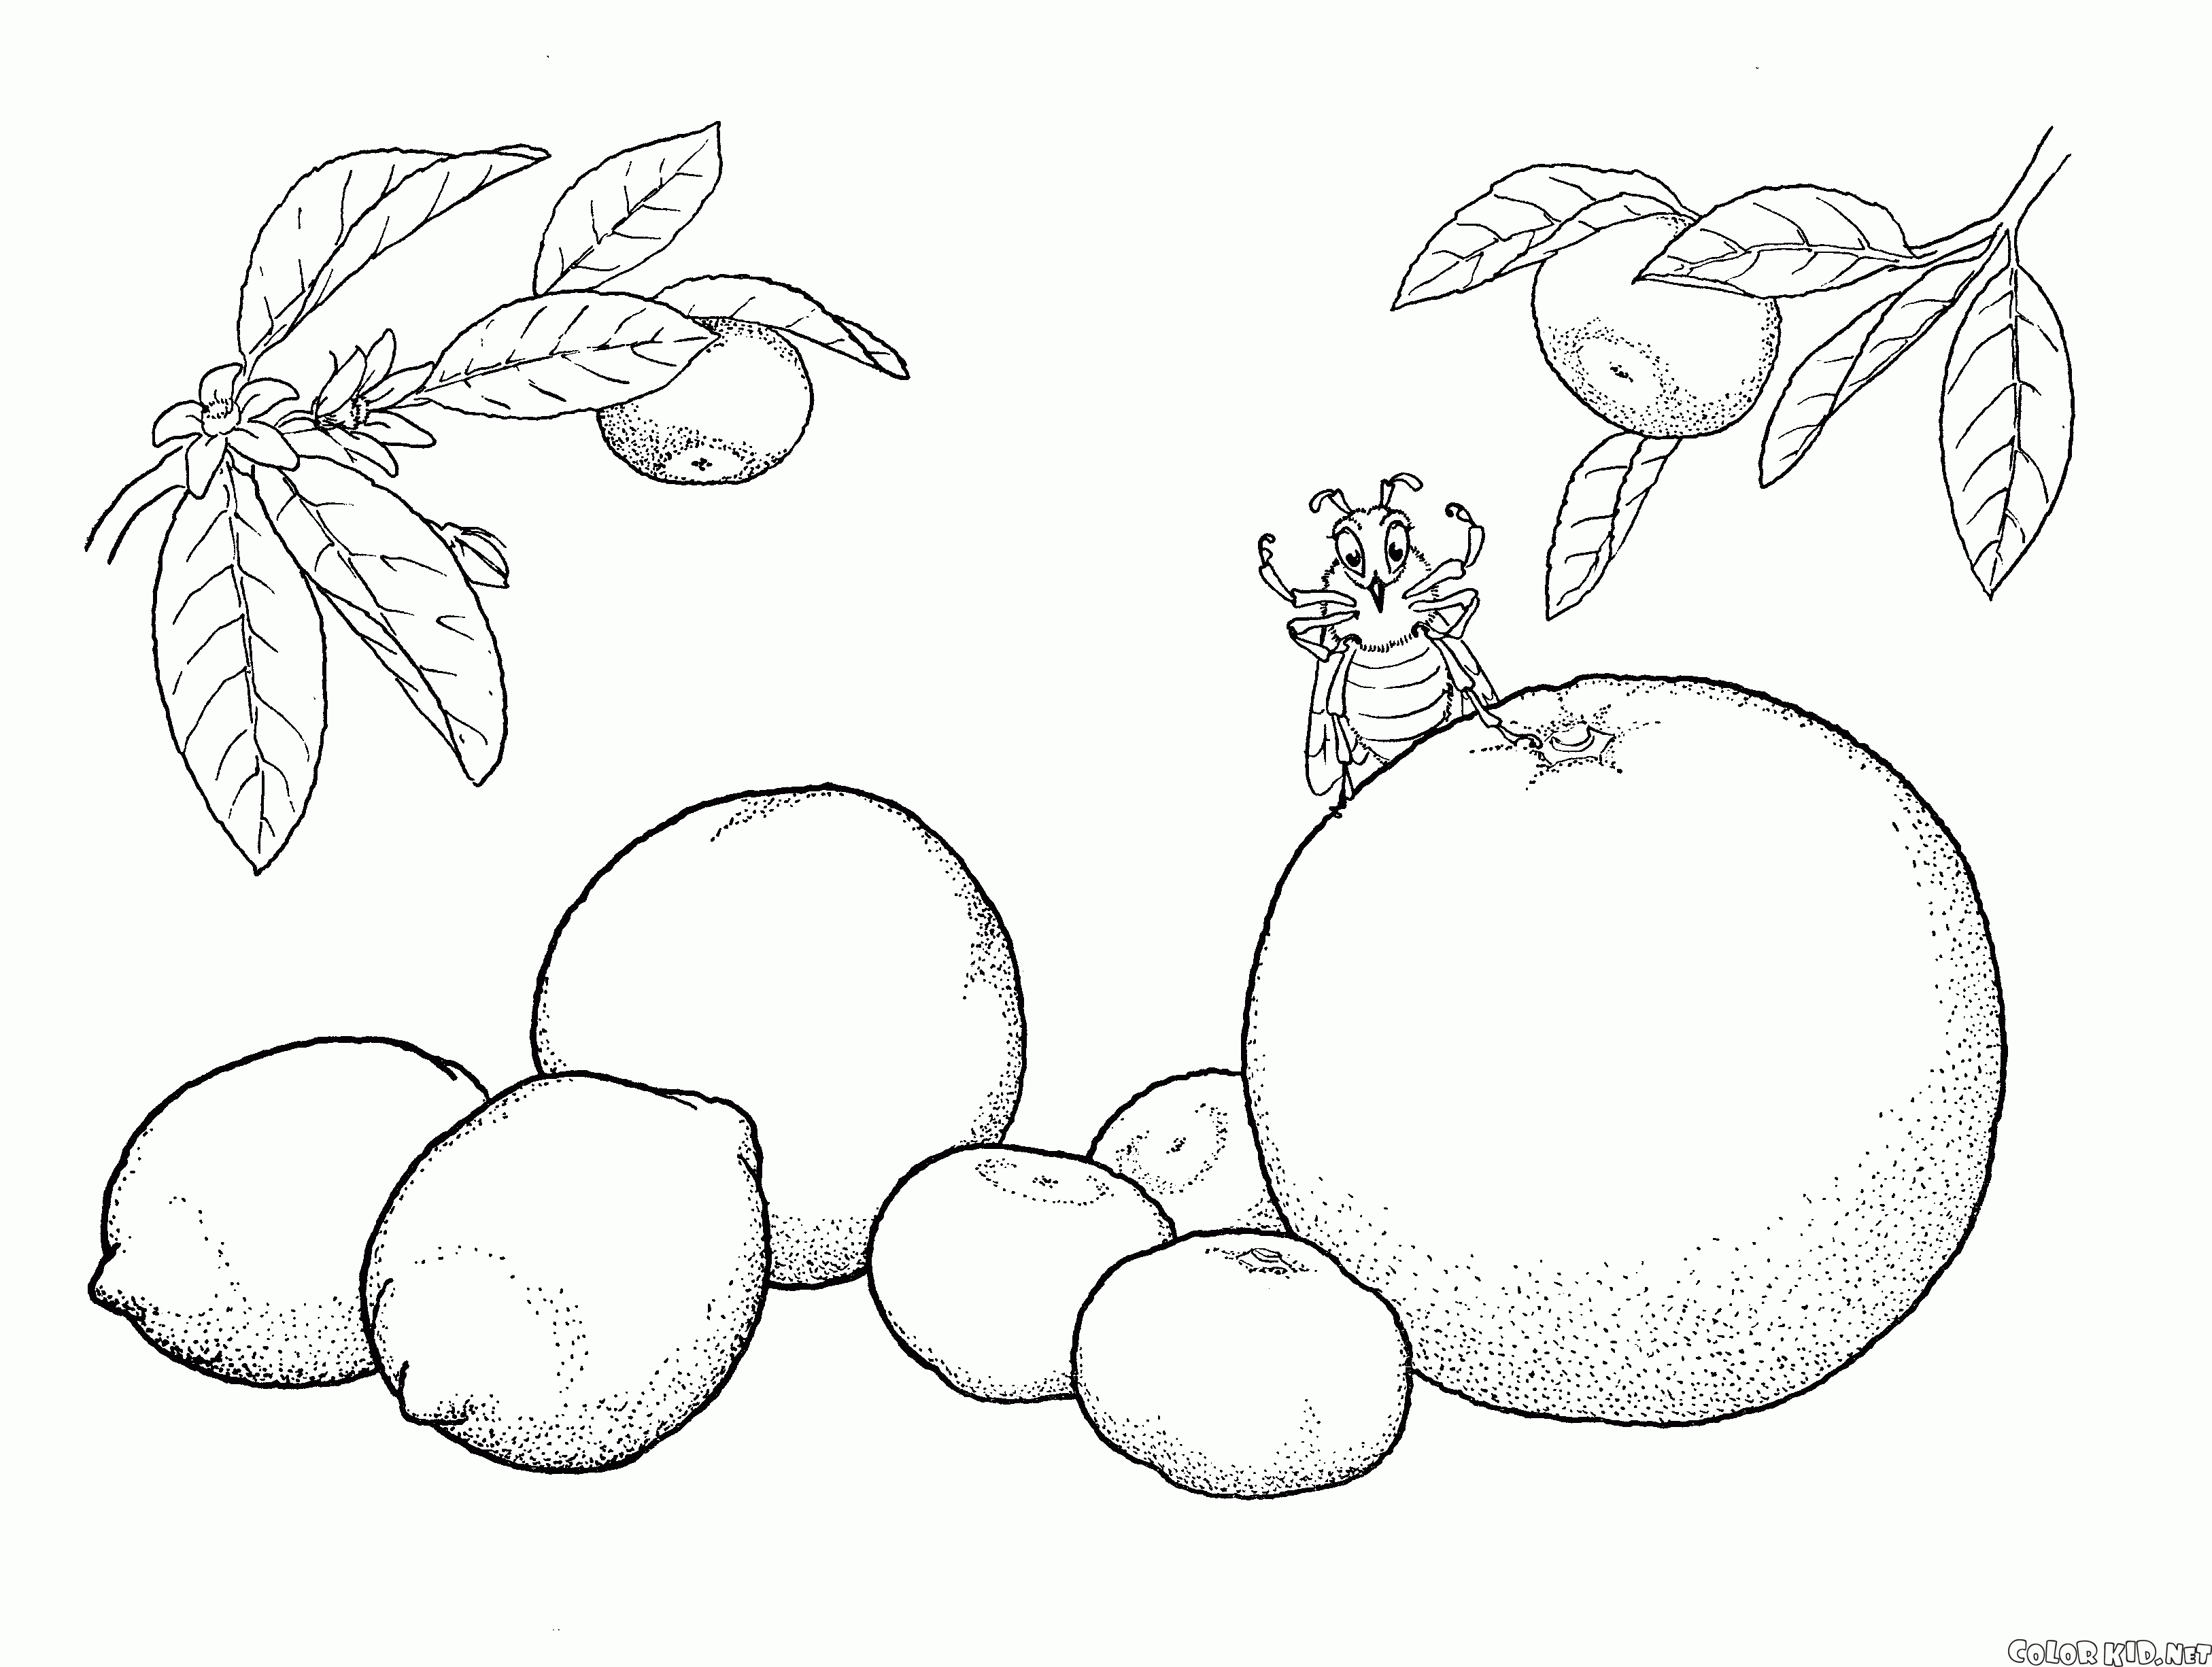 Zitrusfrucht